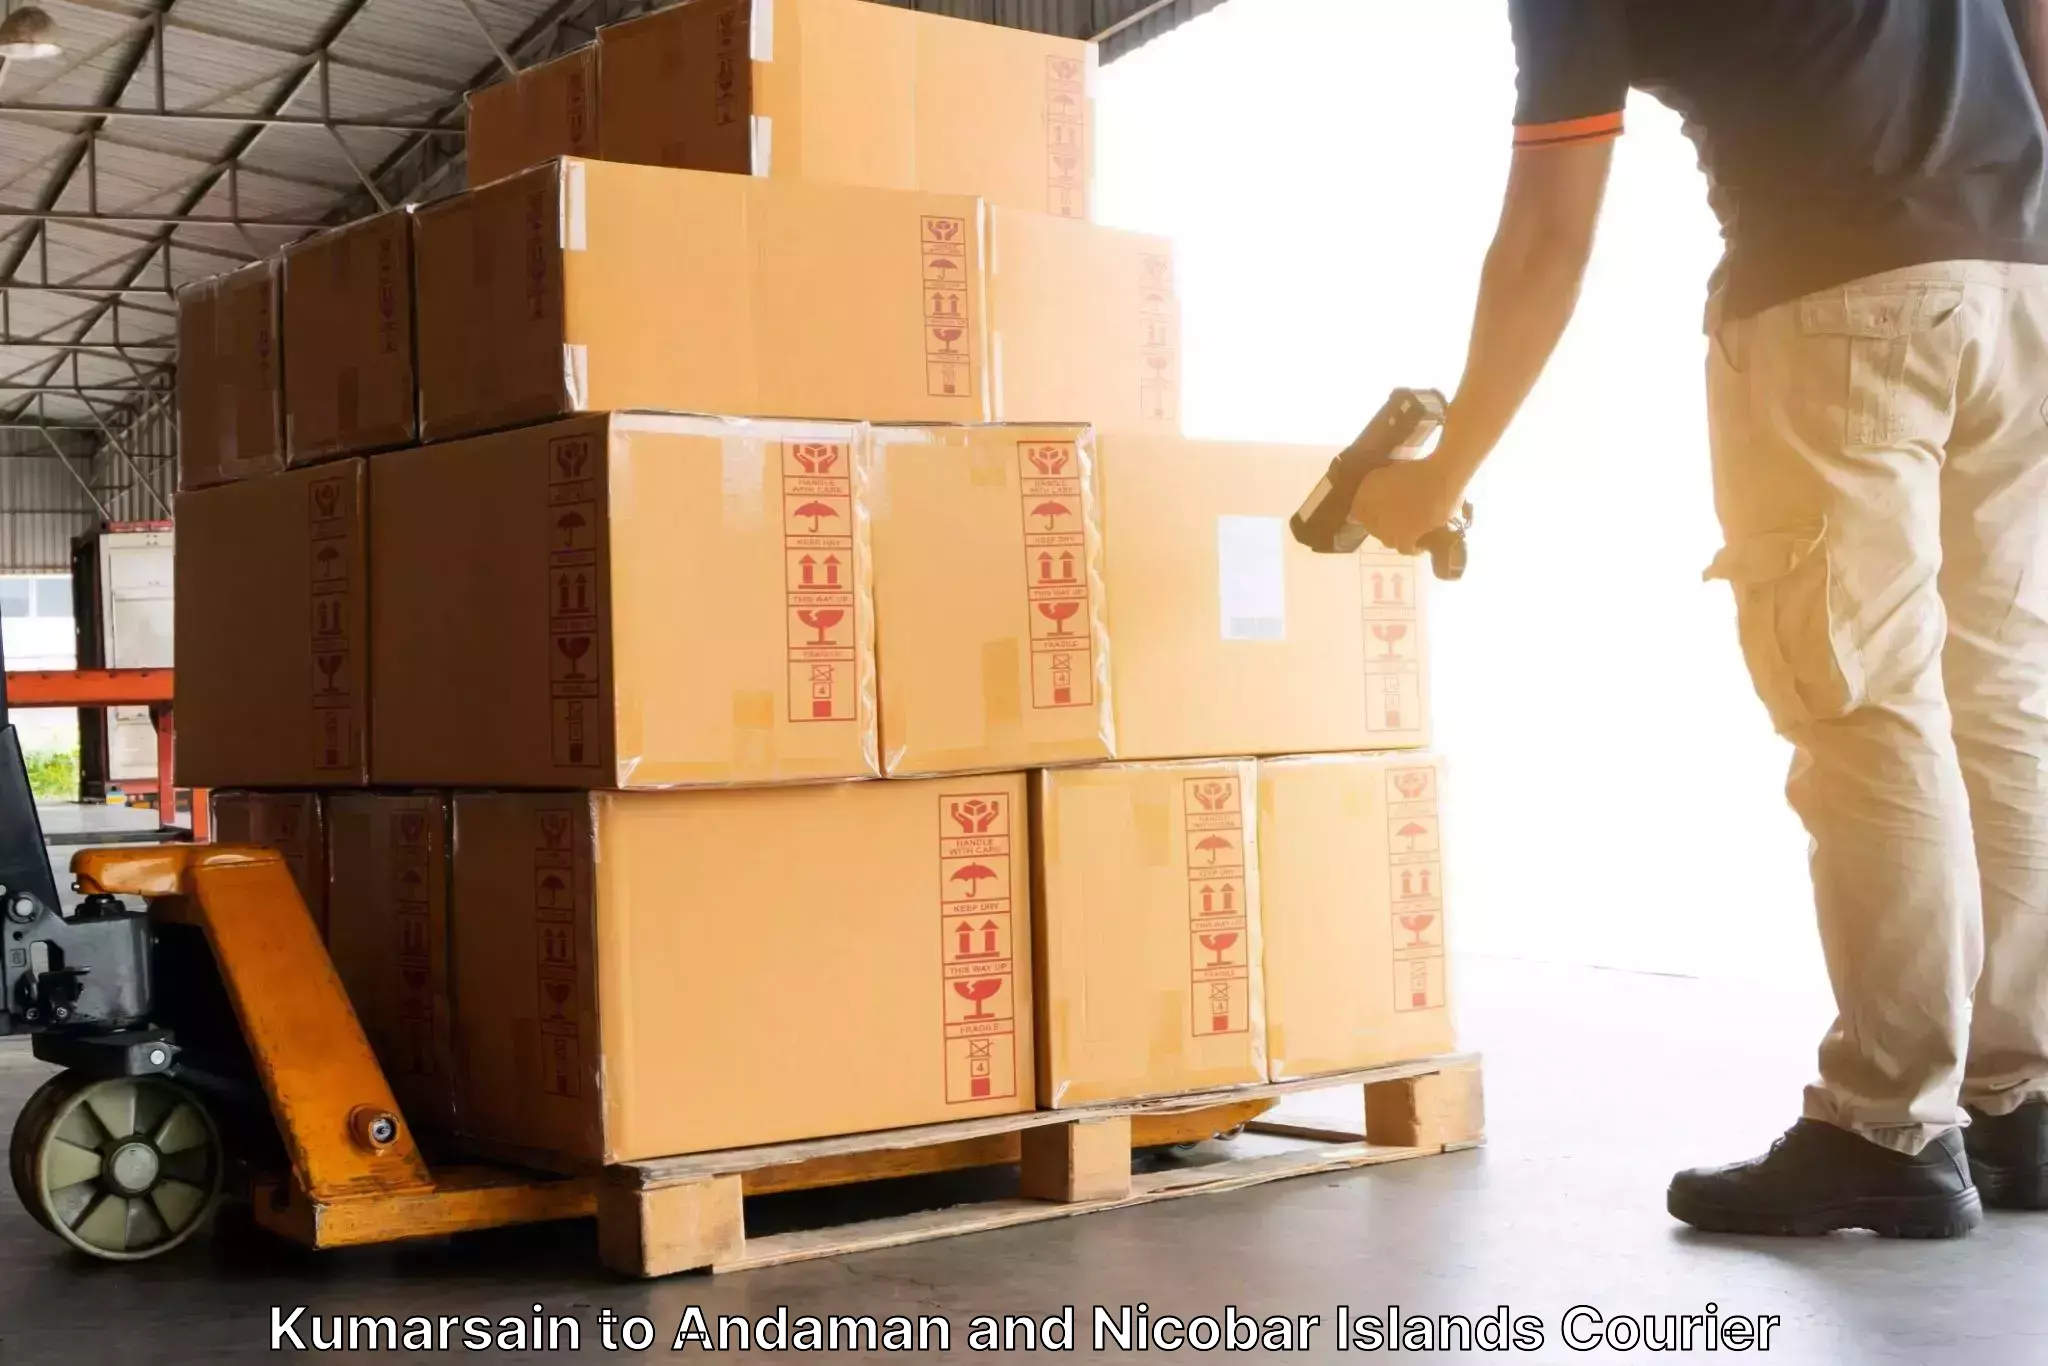 Next-day delivery options Kumarsain to Andaman and Nicobar Islands